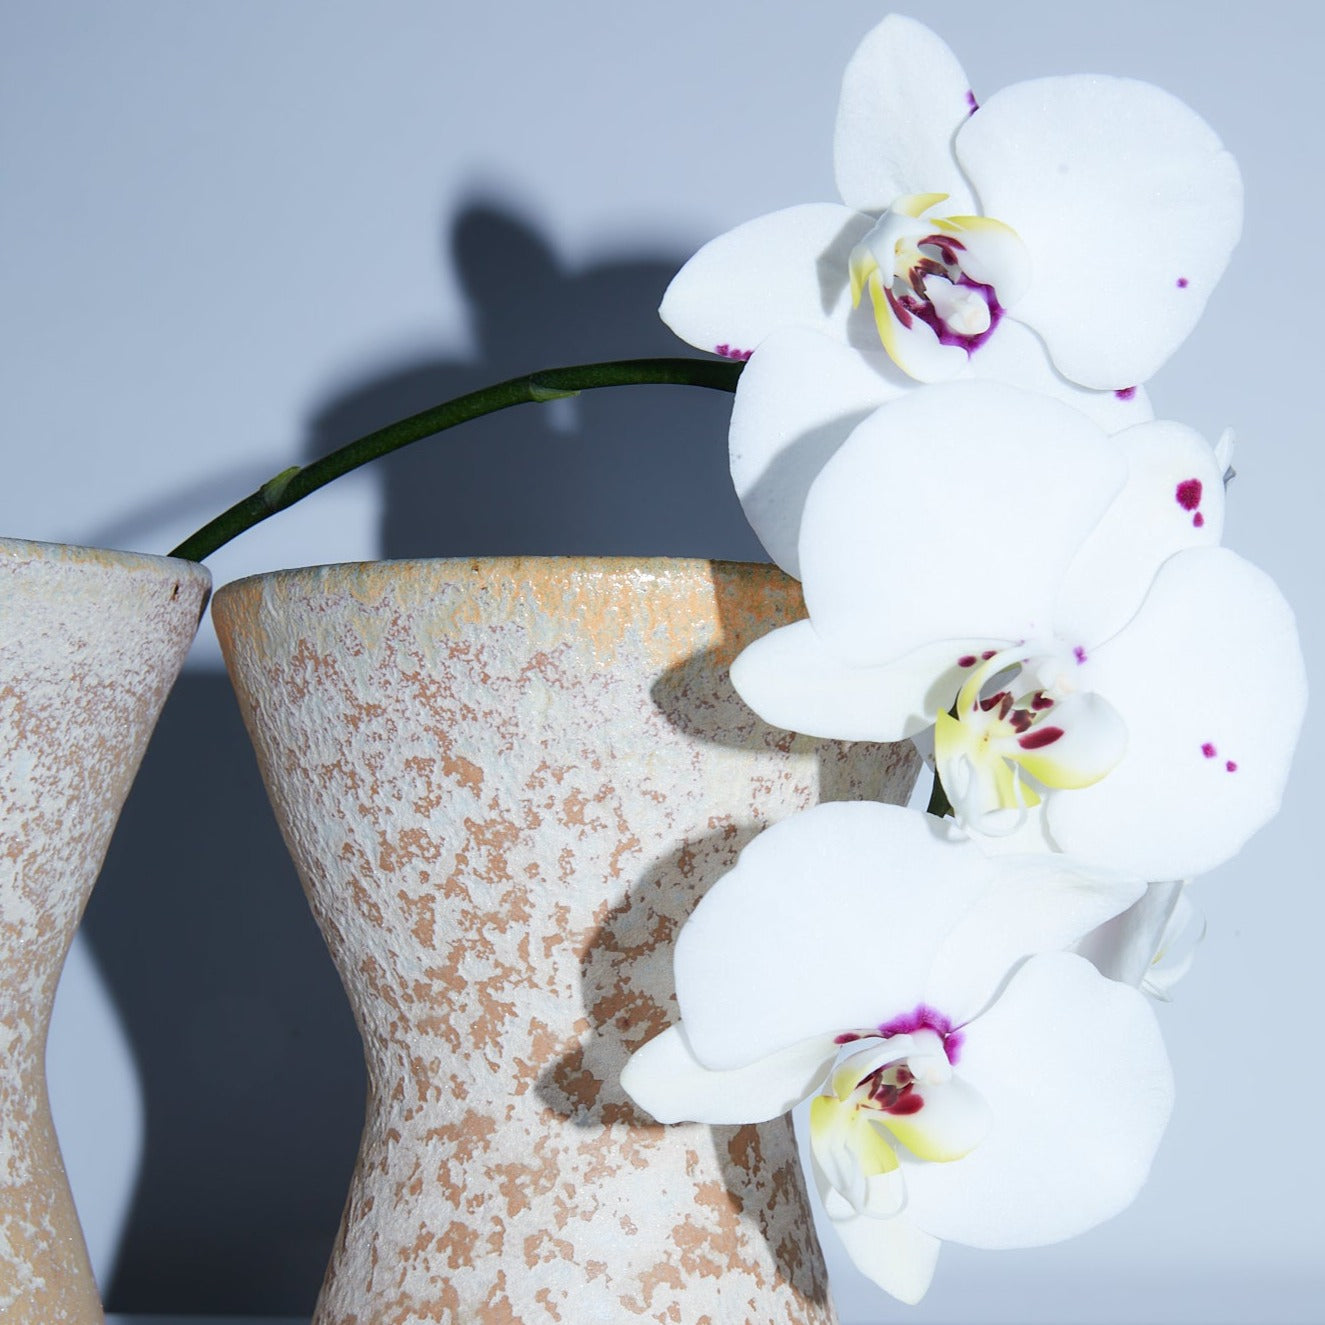 Tulip Vase | Braer Studio | Ceramic Pottery 